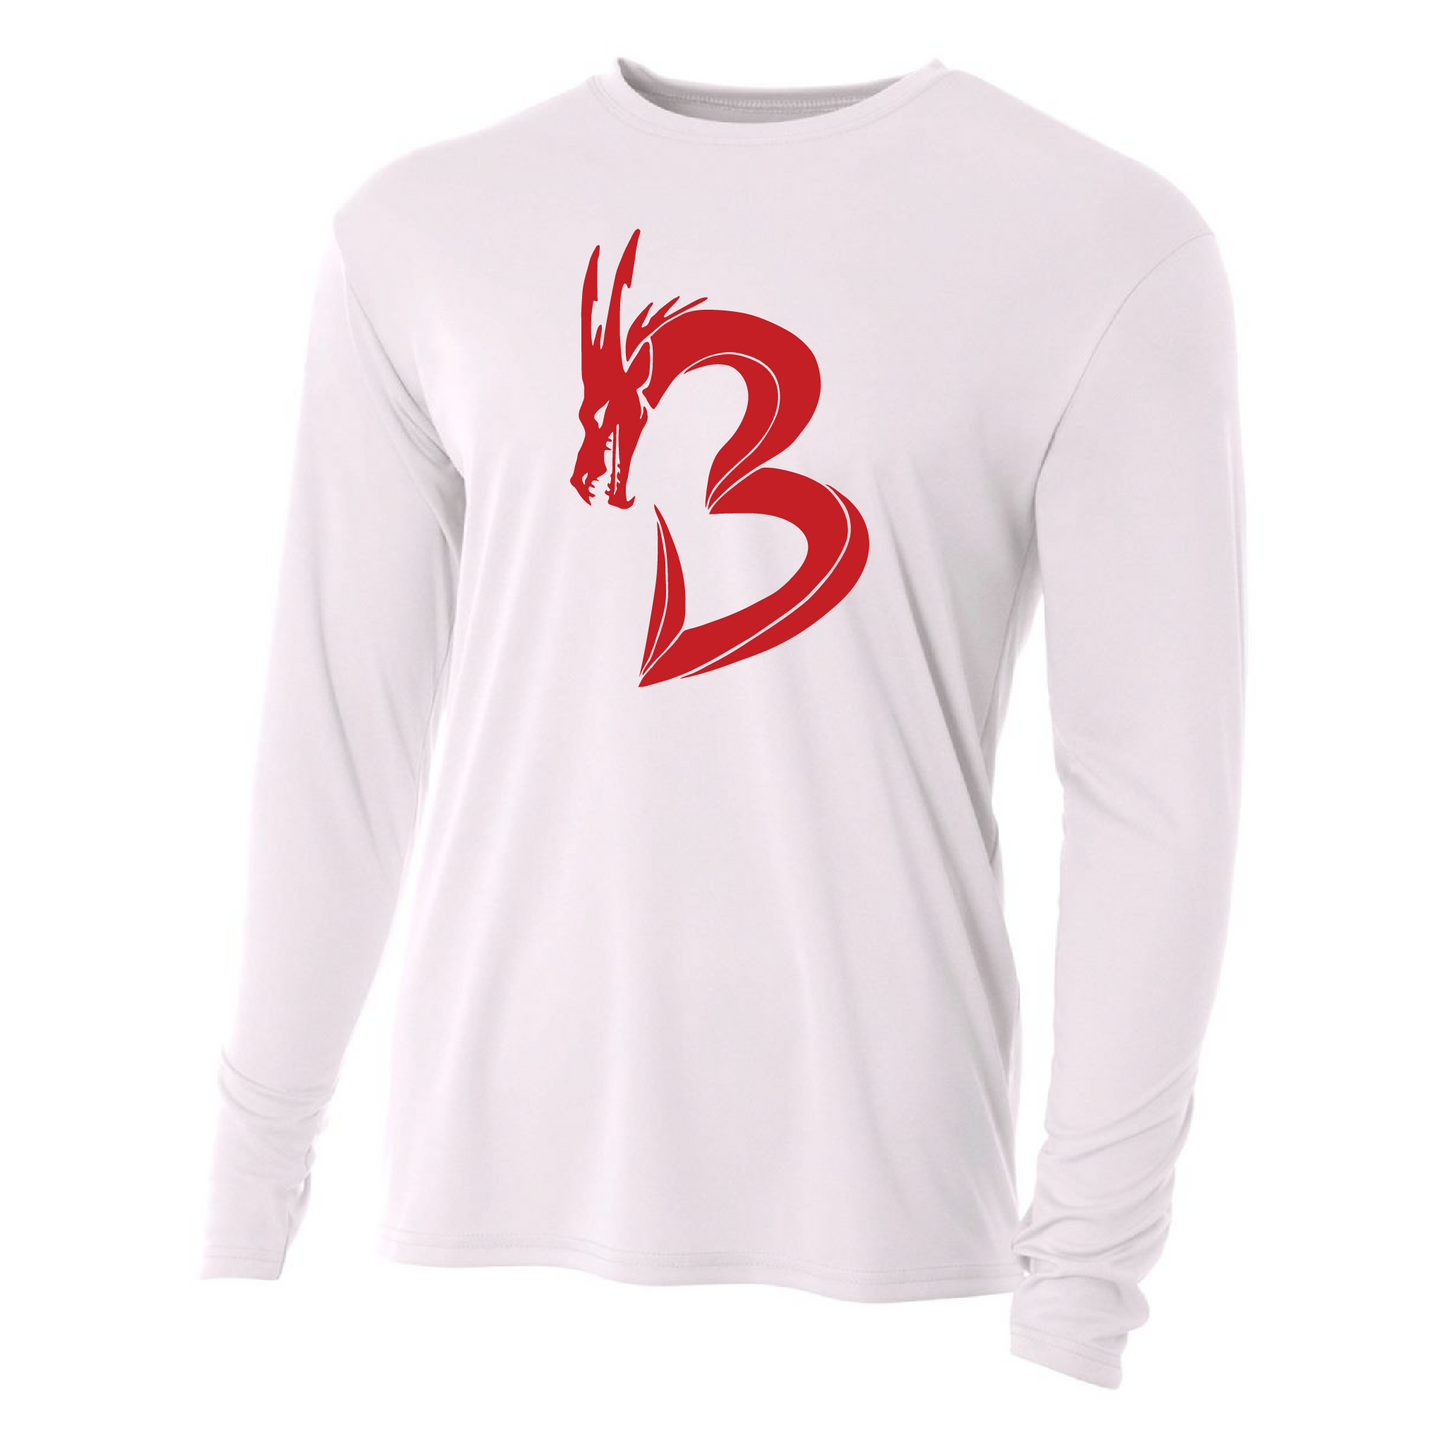 Mens L/S T-Shirt - NP Bands "B" Dragon (red)